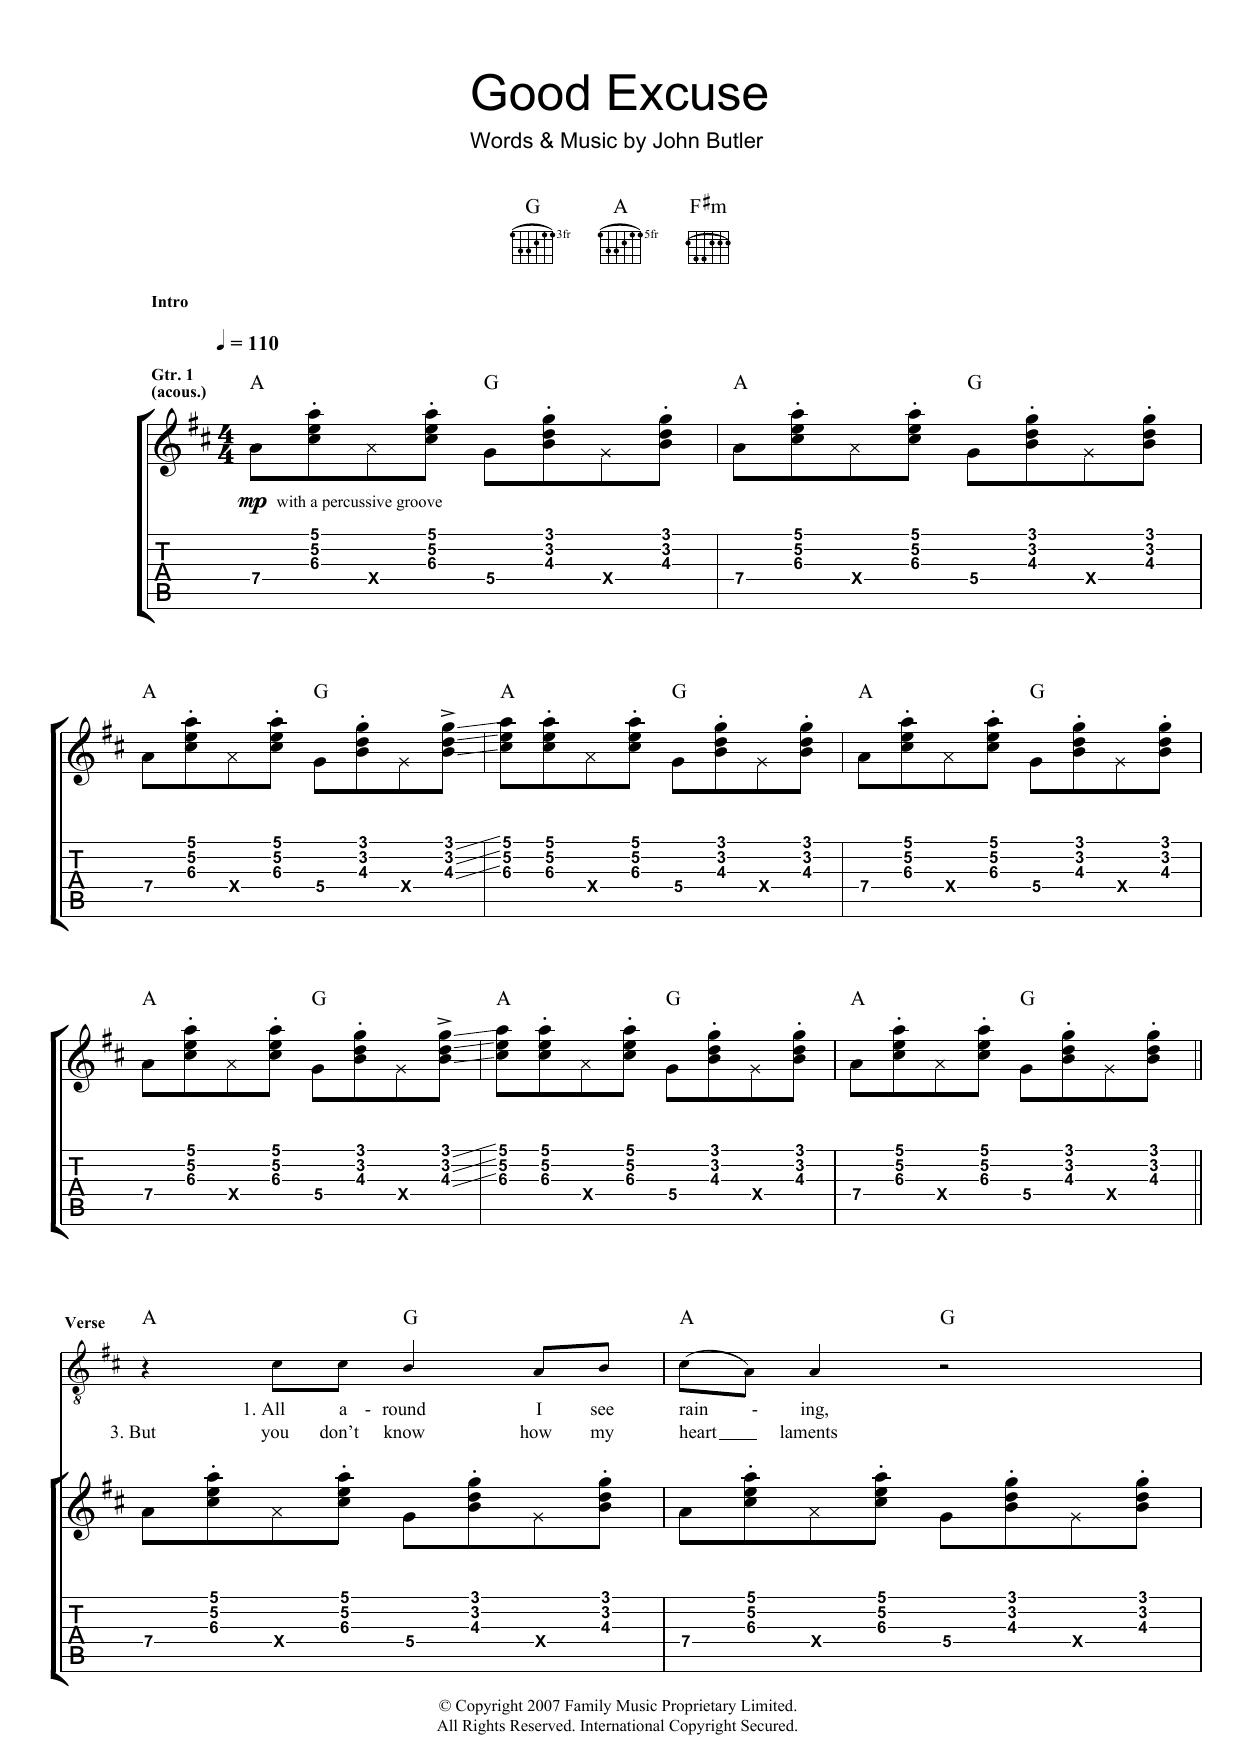 John Butler Good Excuse Sheet Music Notes & Chords for Guitar Tab - Download or Print PDF